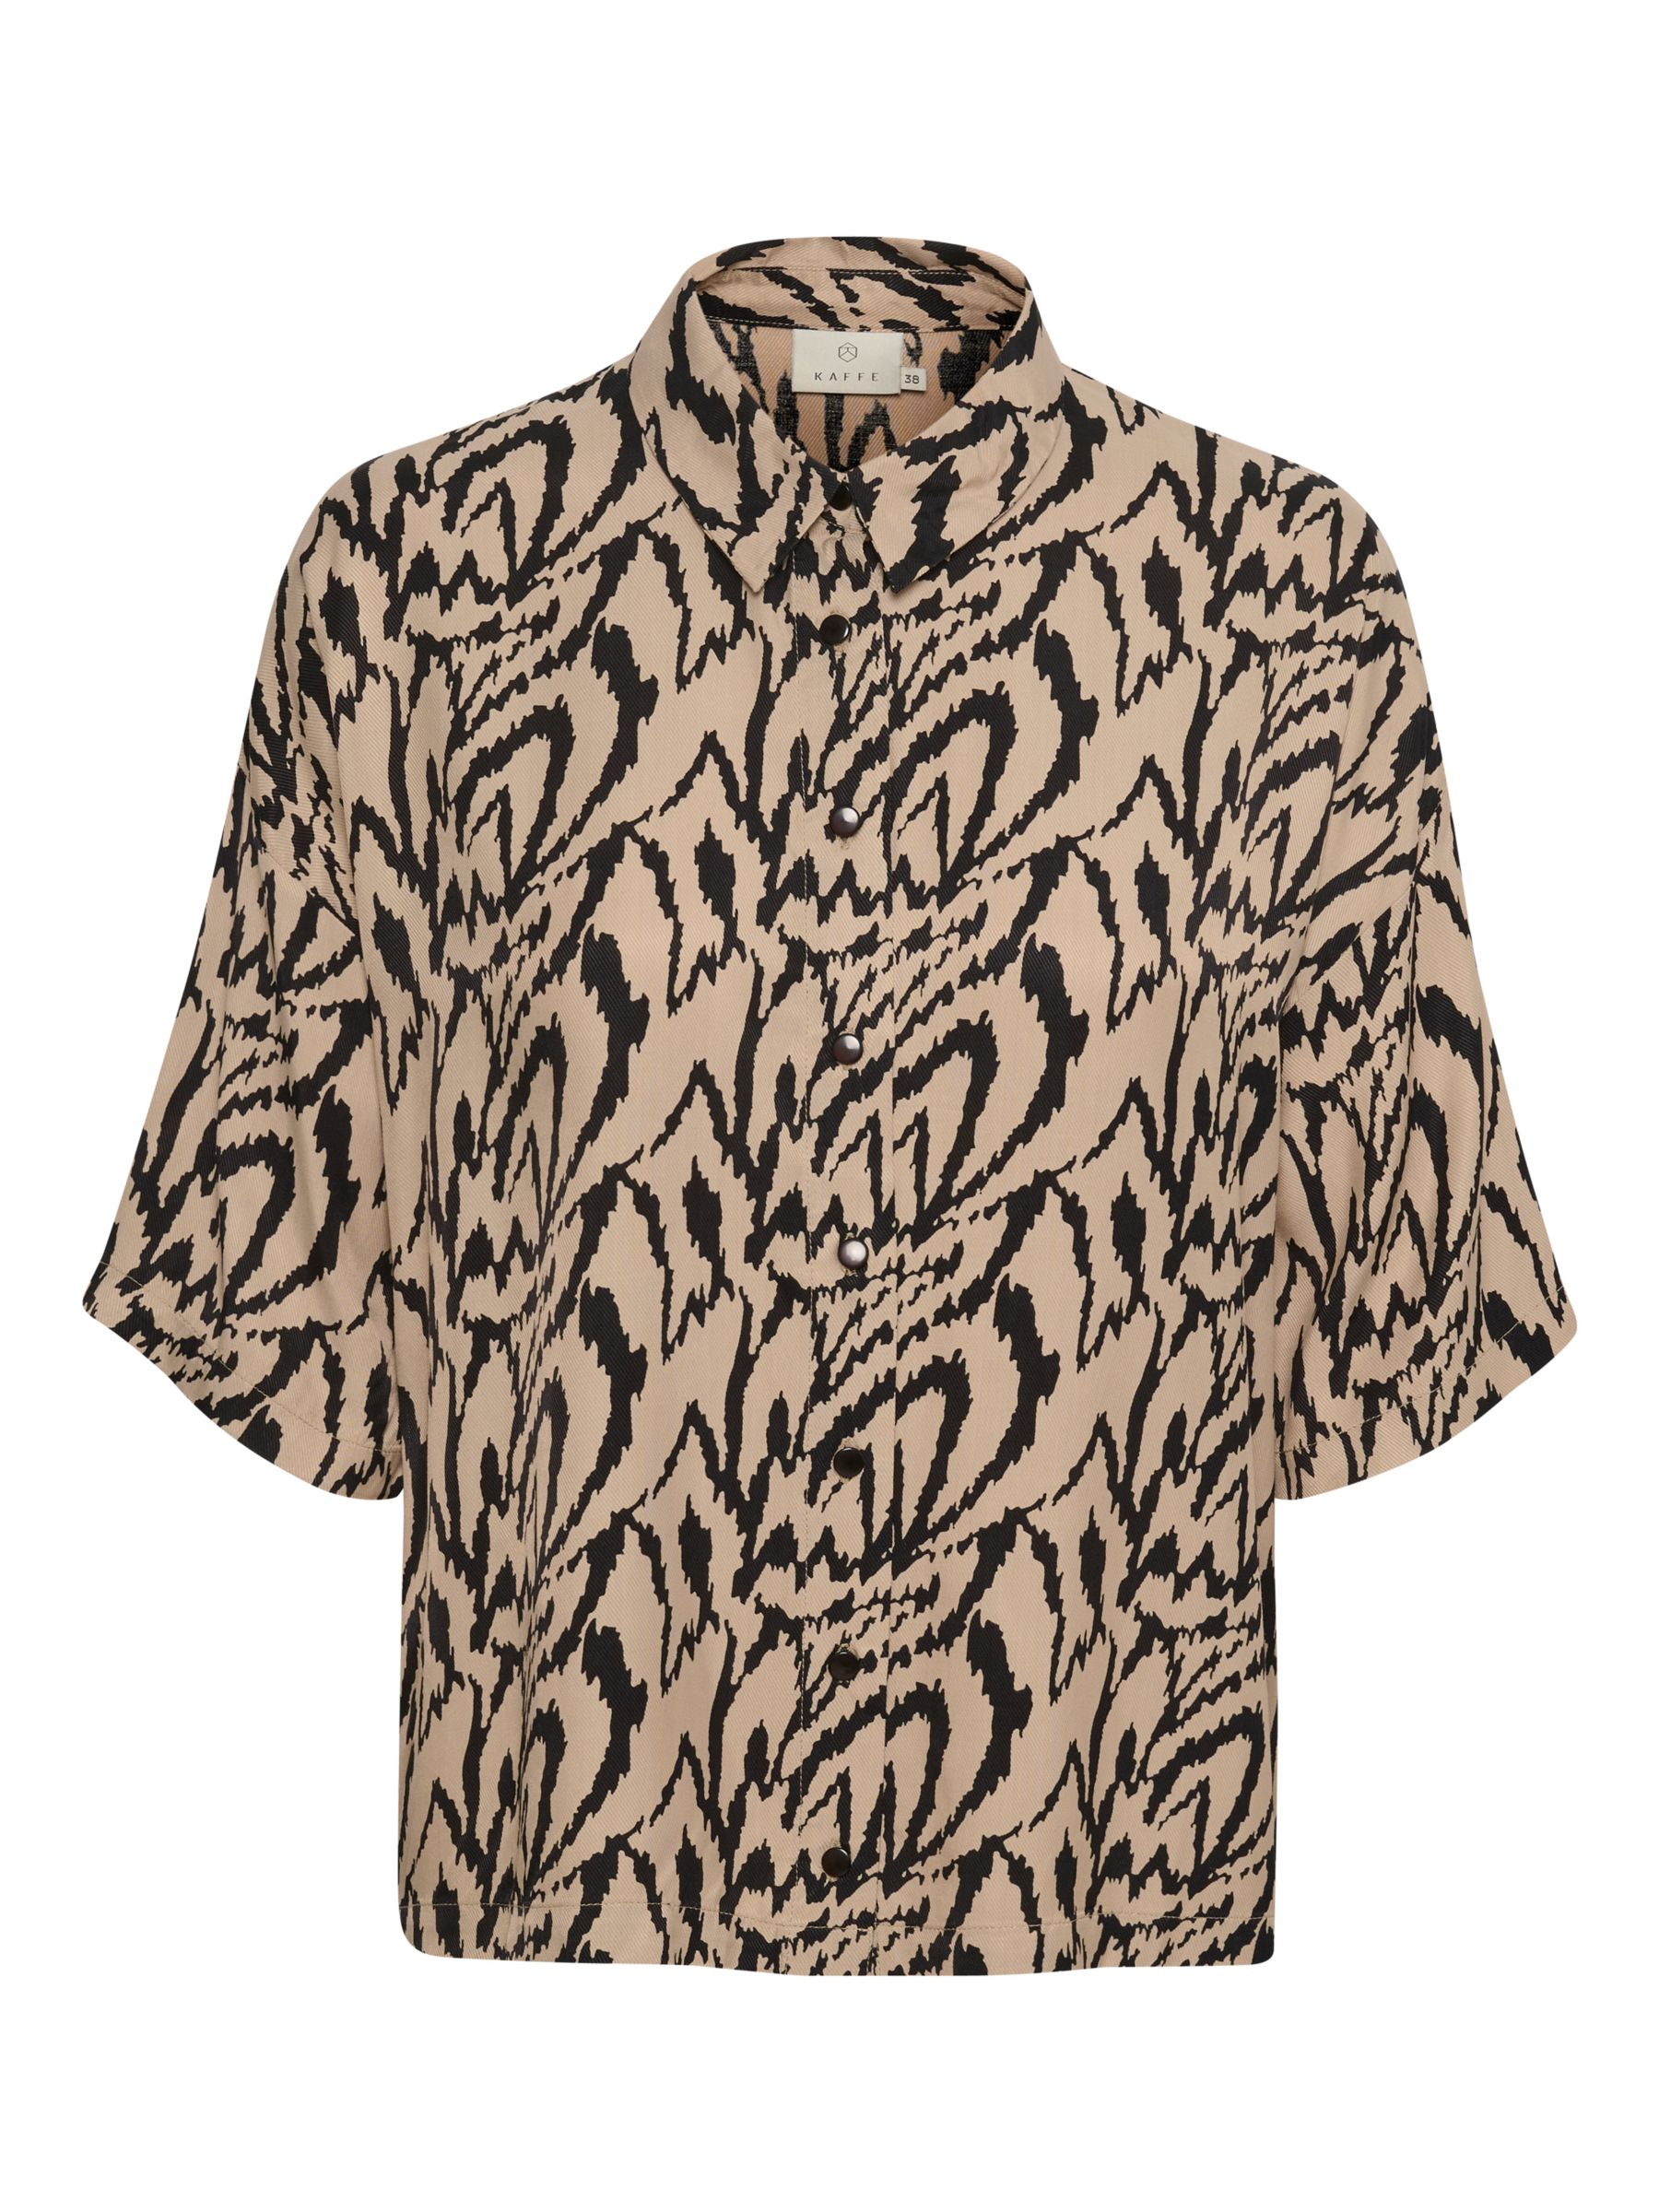 KAFFE Criti Short Sleeve Shirt, Sand/Black at John Lewis & Partners